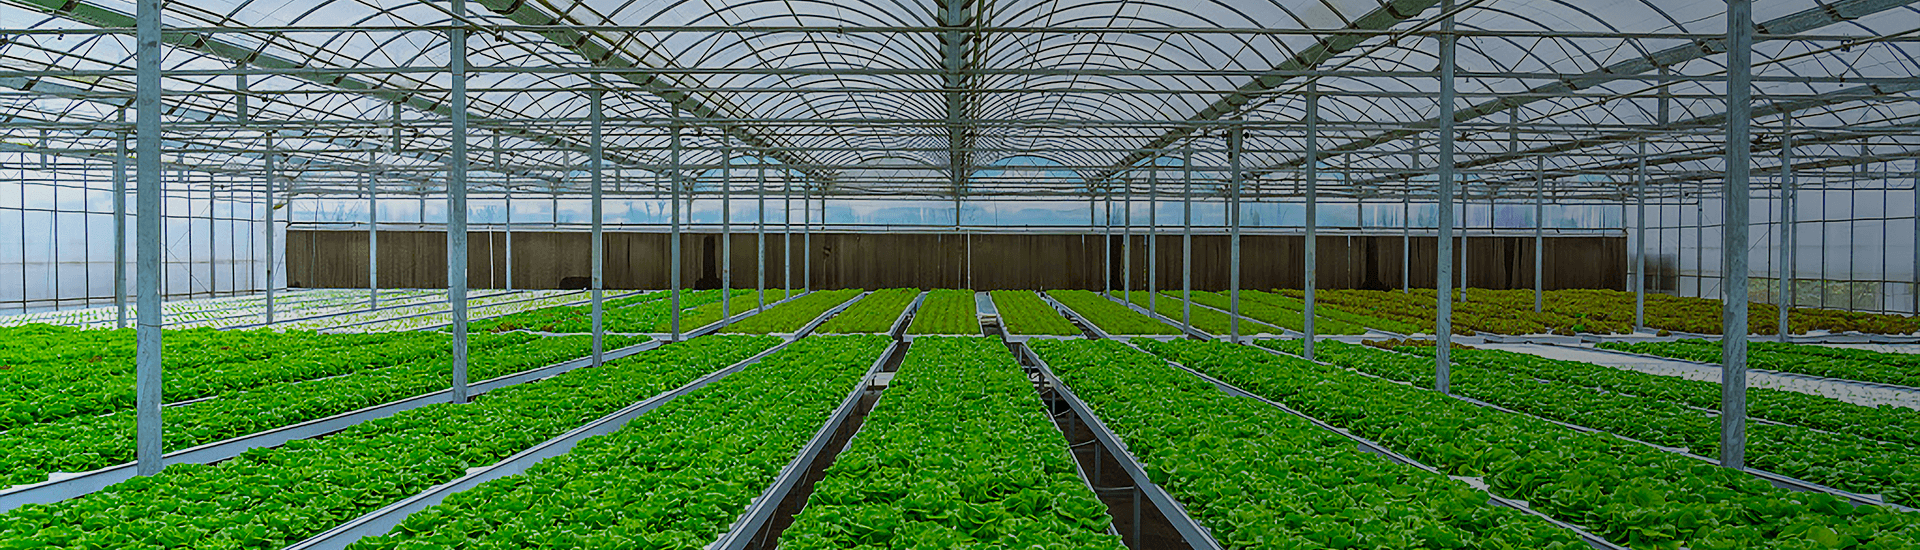 Vegetable growing base